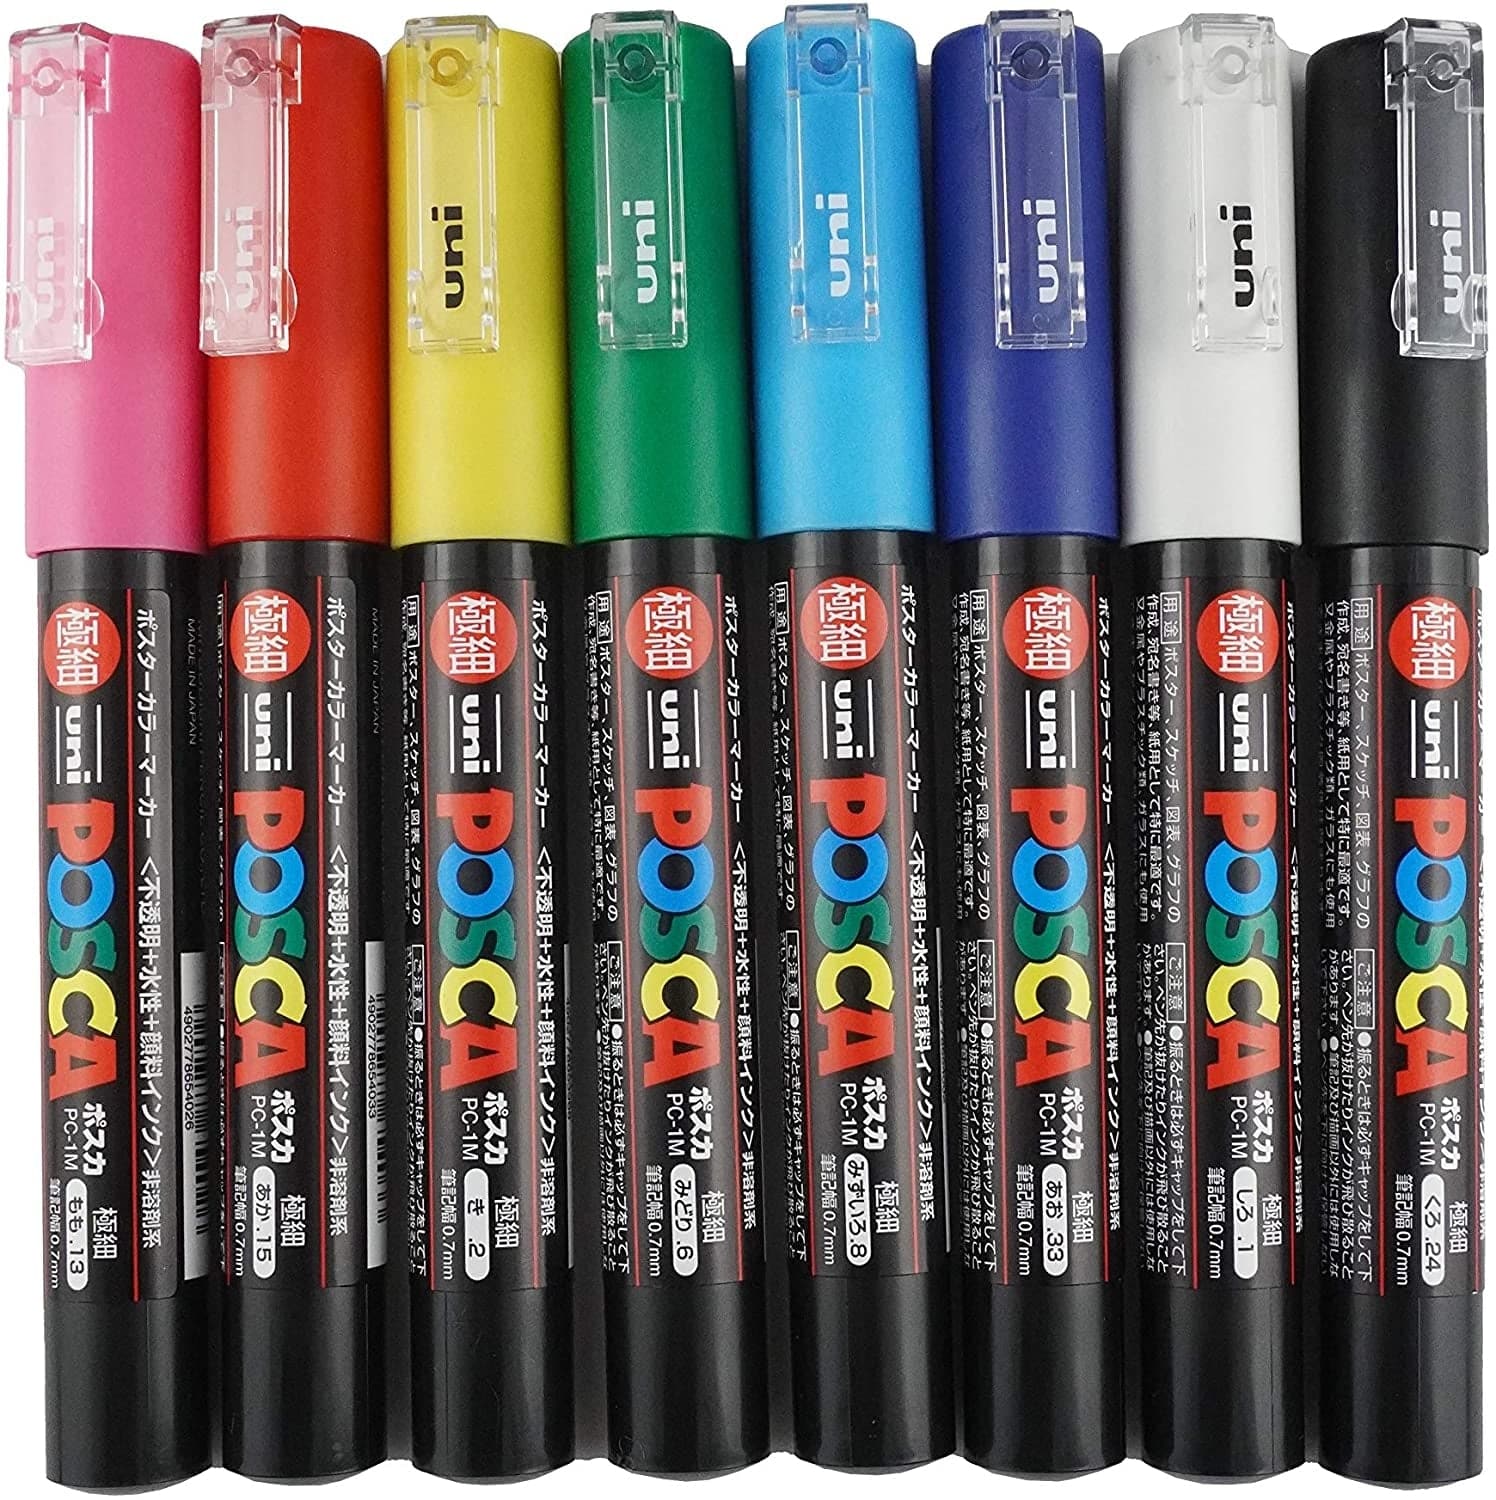 Mitsubishi Uni Posca Water Pen Extra Fine Marker Set 12 Colors PC